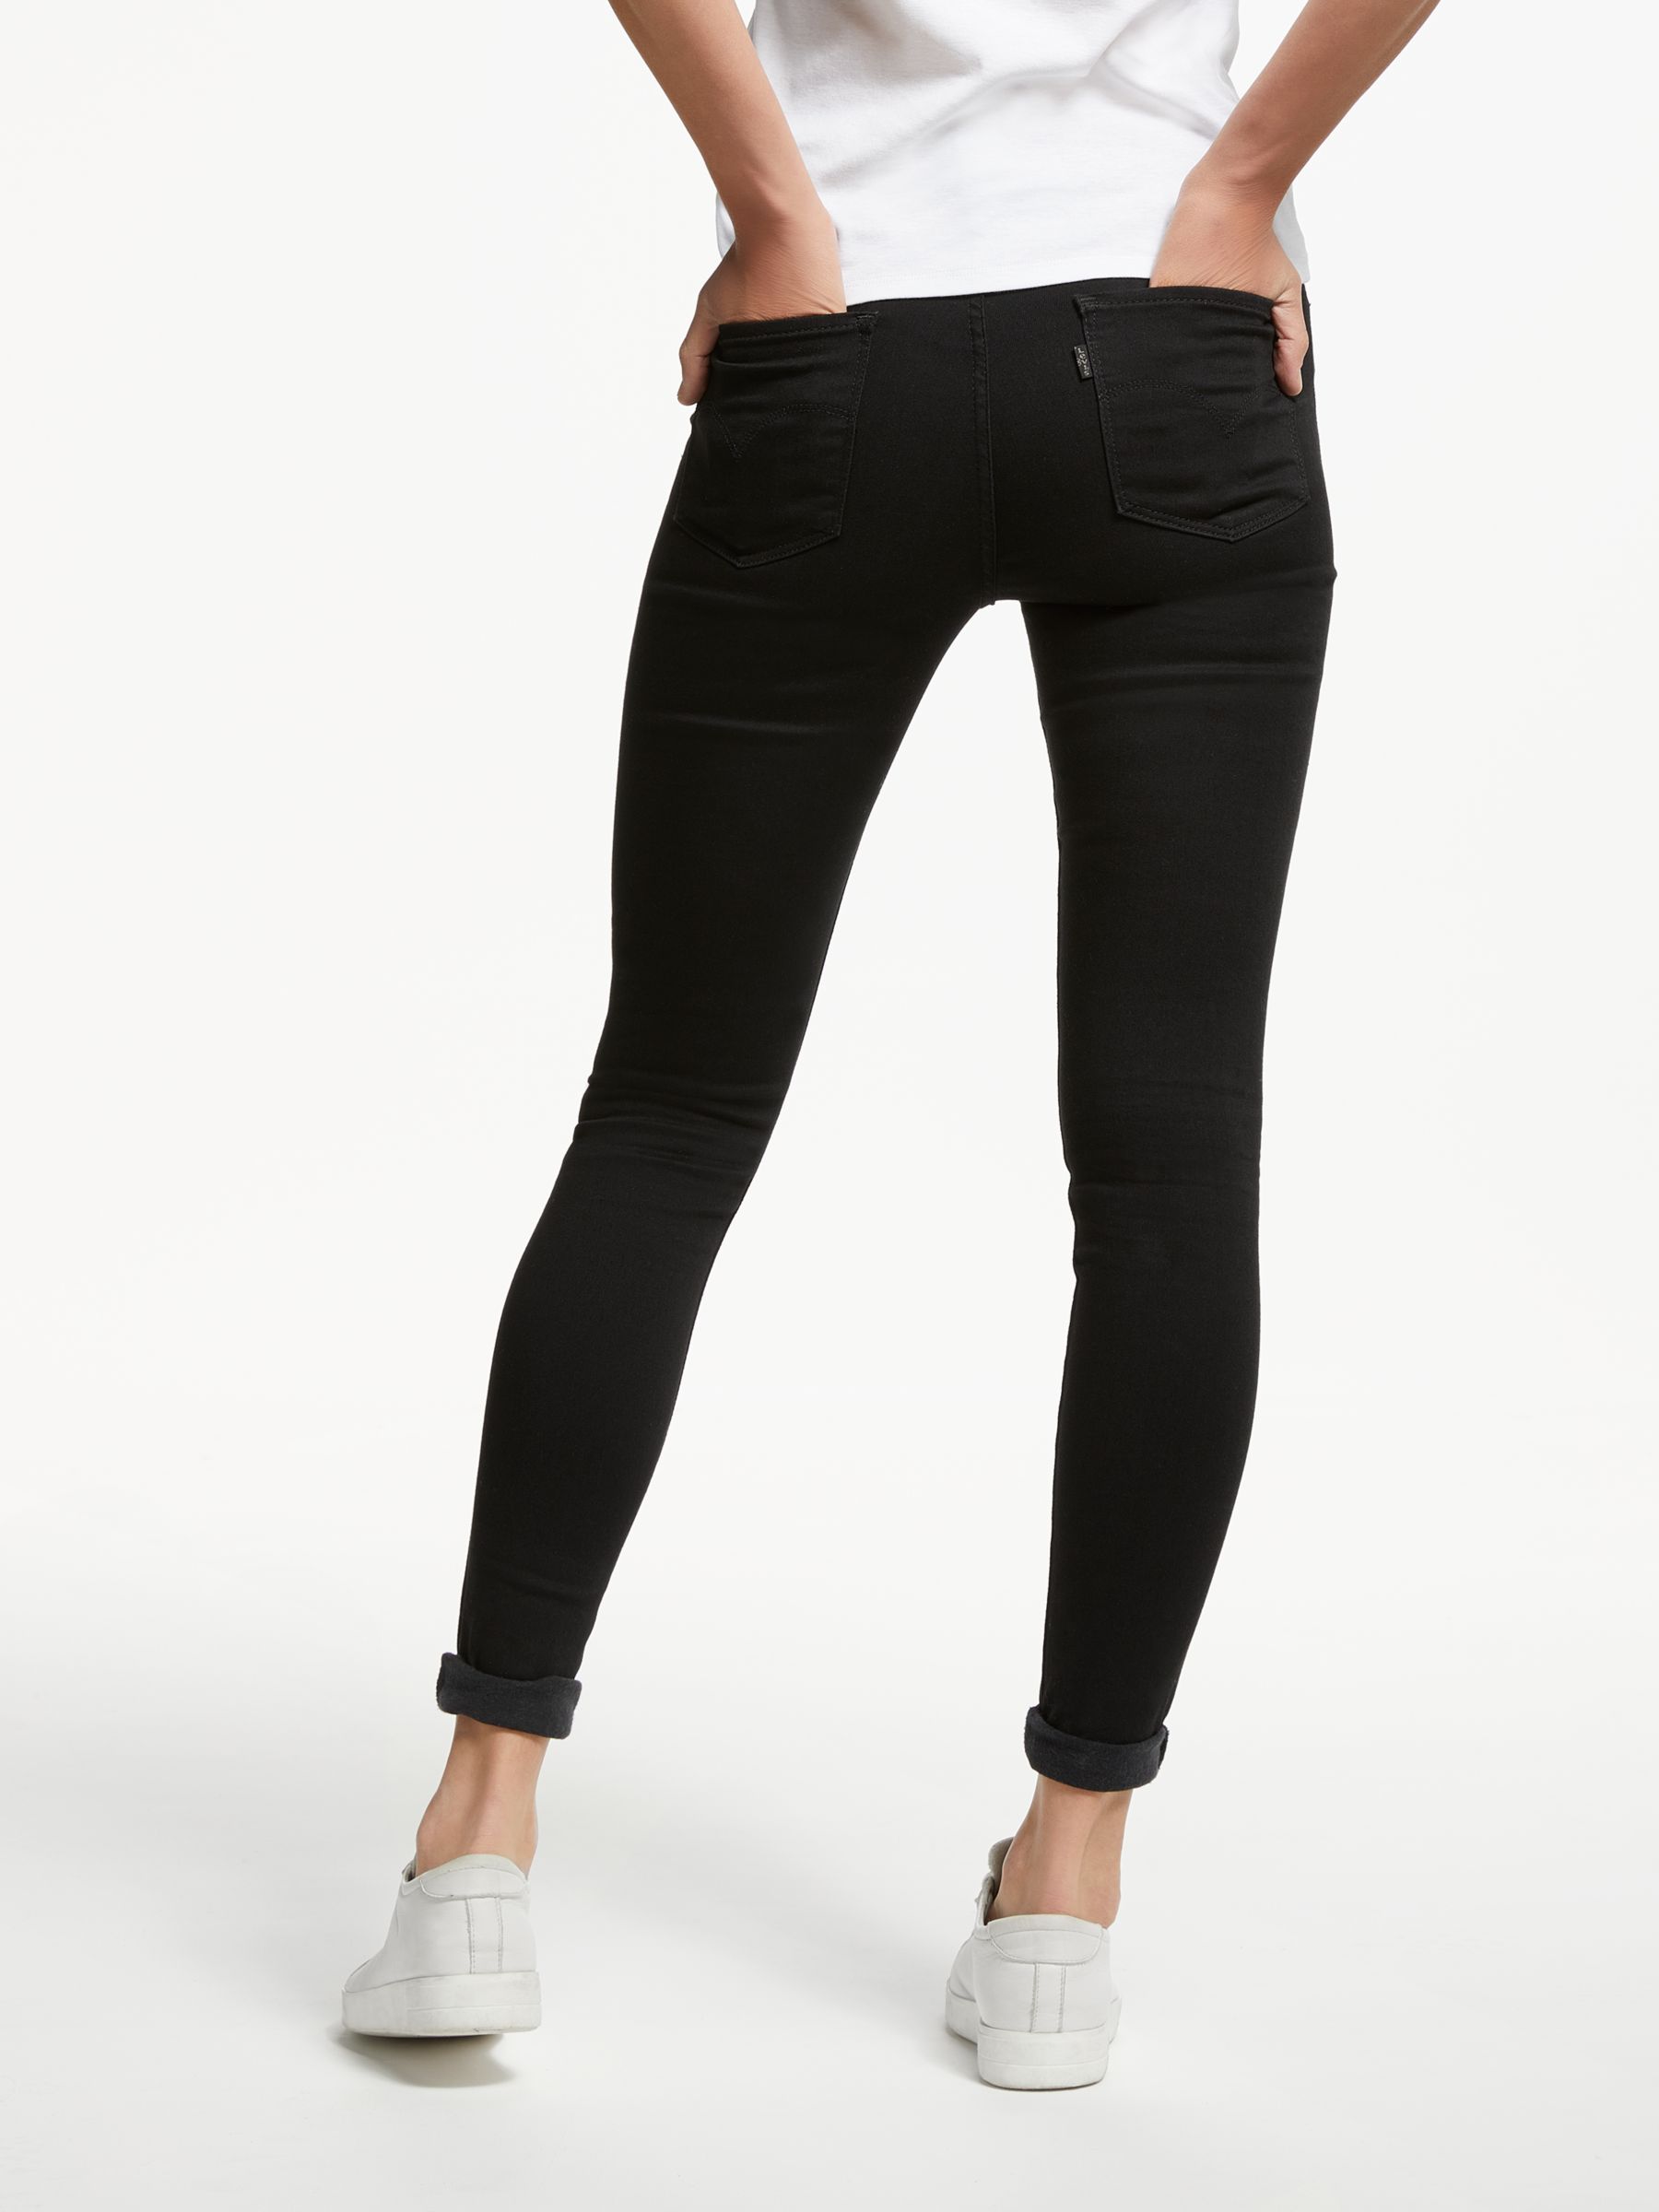 Levi's 720 High Rise Super Skinny Jeans, Black Galaxy, W27/L30